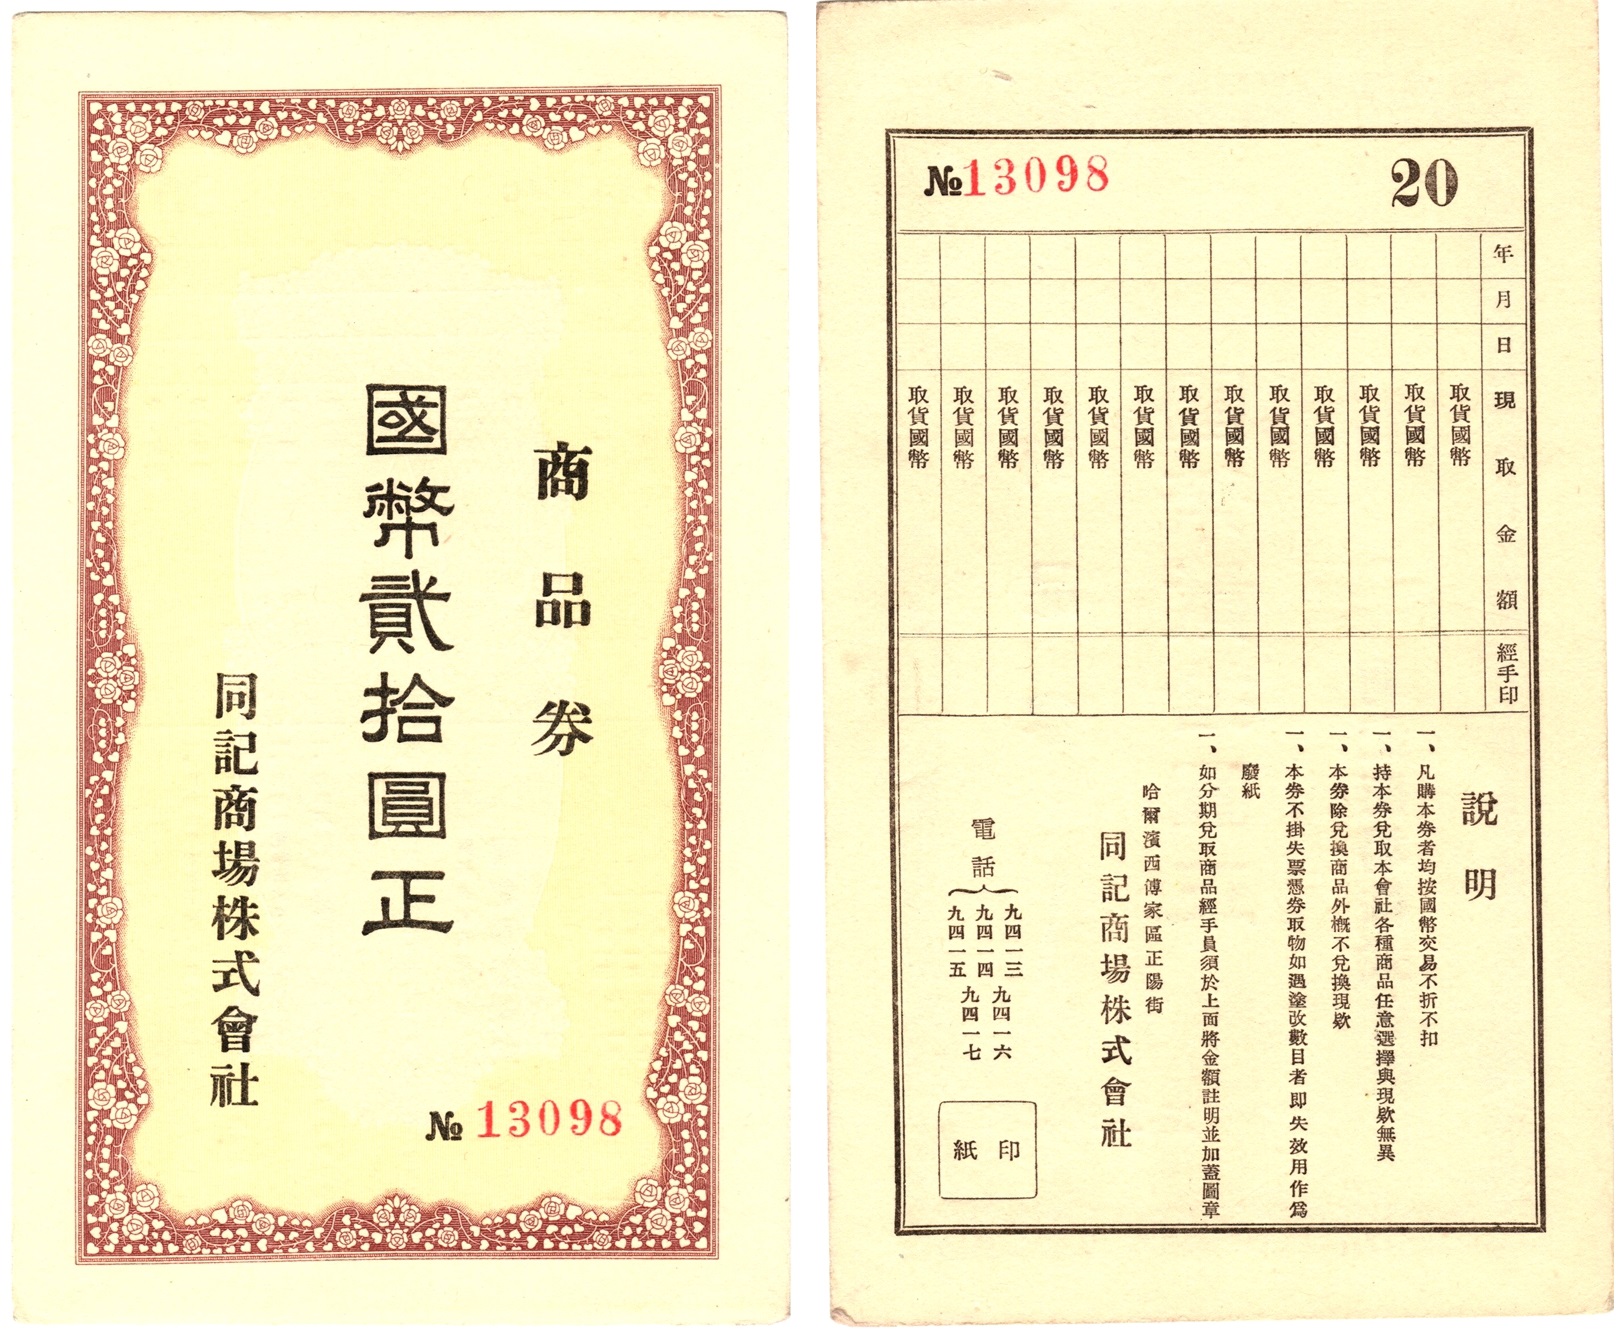 D6025, Manchuria Department Store Cash Coupons 20 Dollars, 1930's Watermark